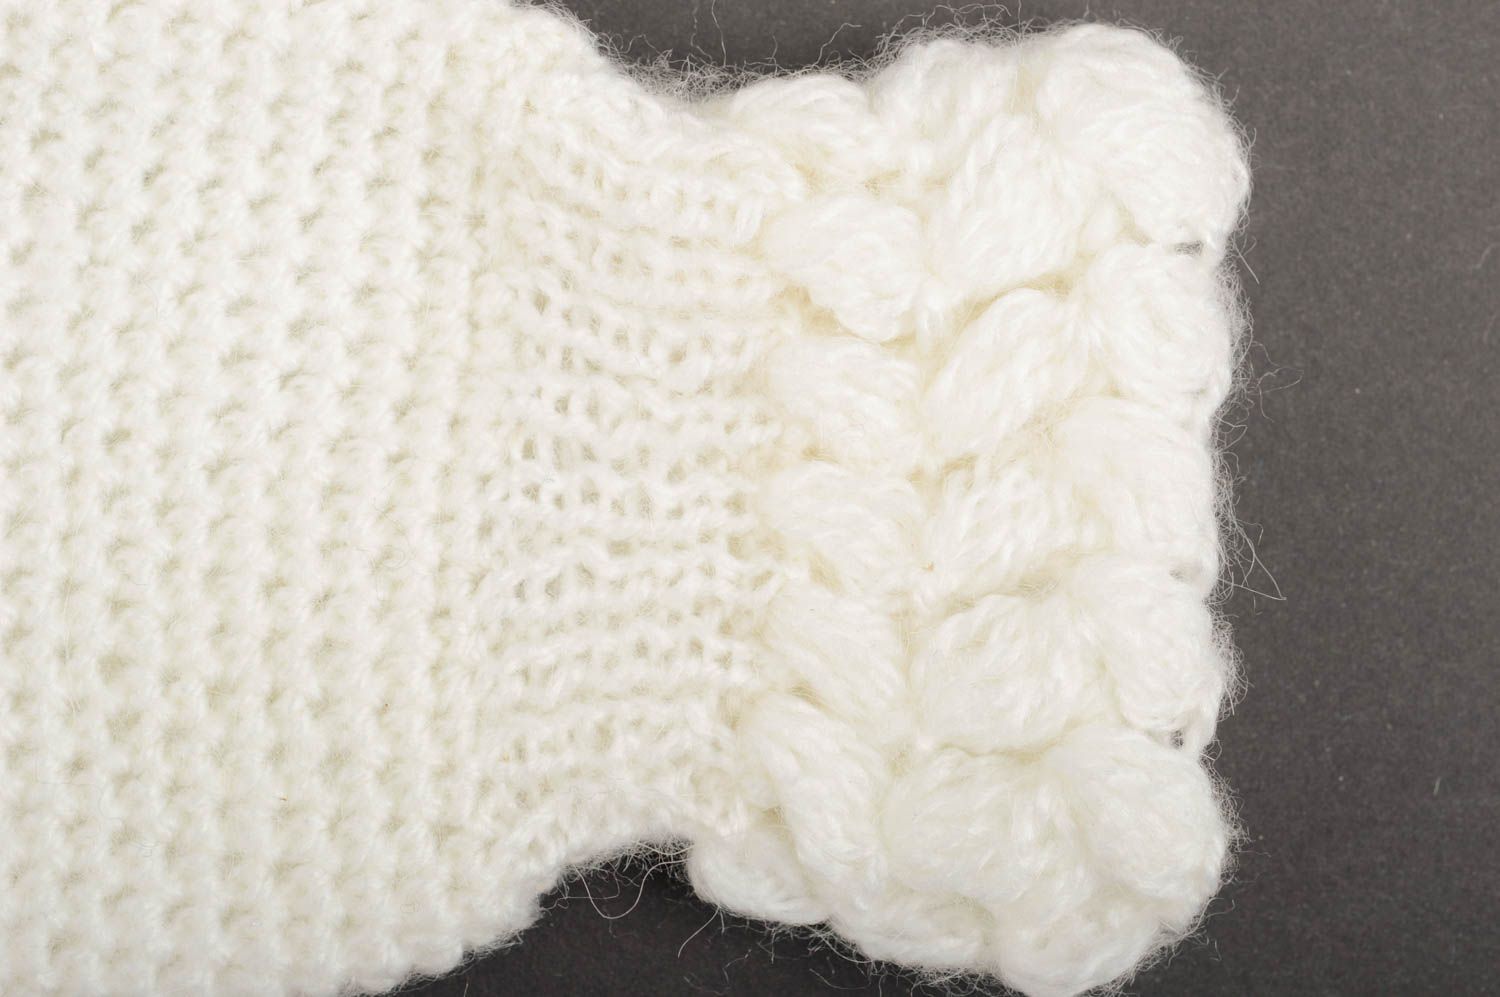 Handmade white crocheted mitts 2 stylish festive mitts beautiful accessories photo 5